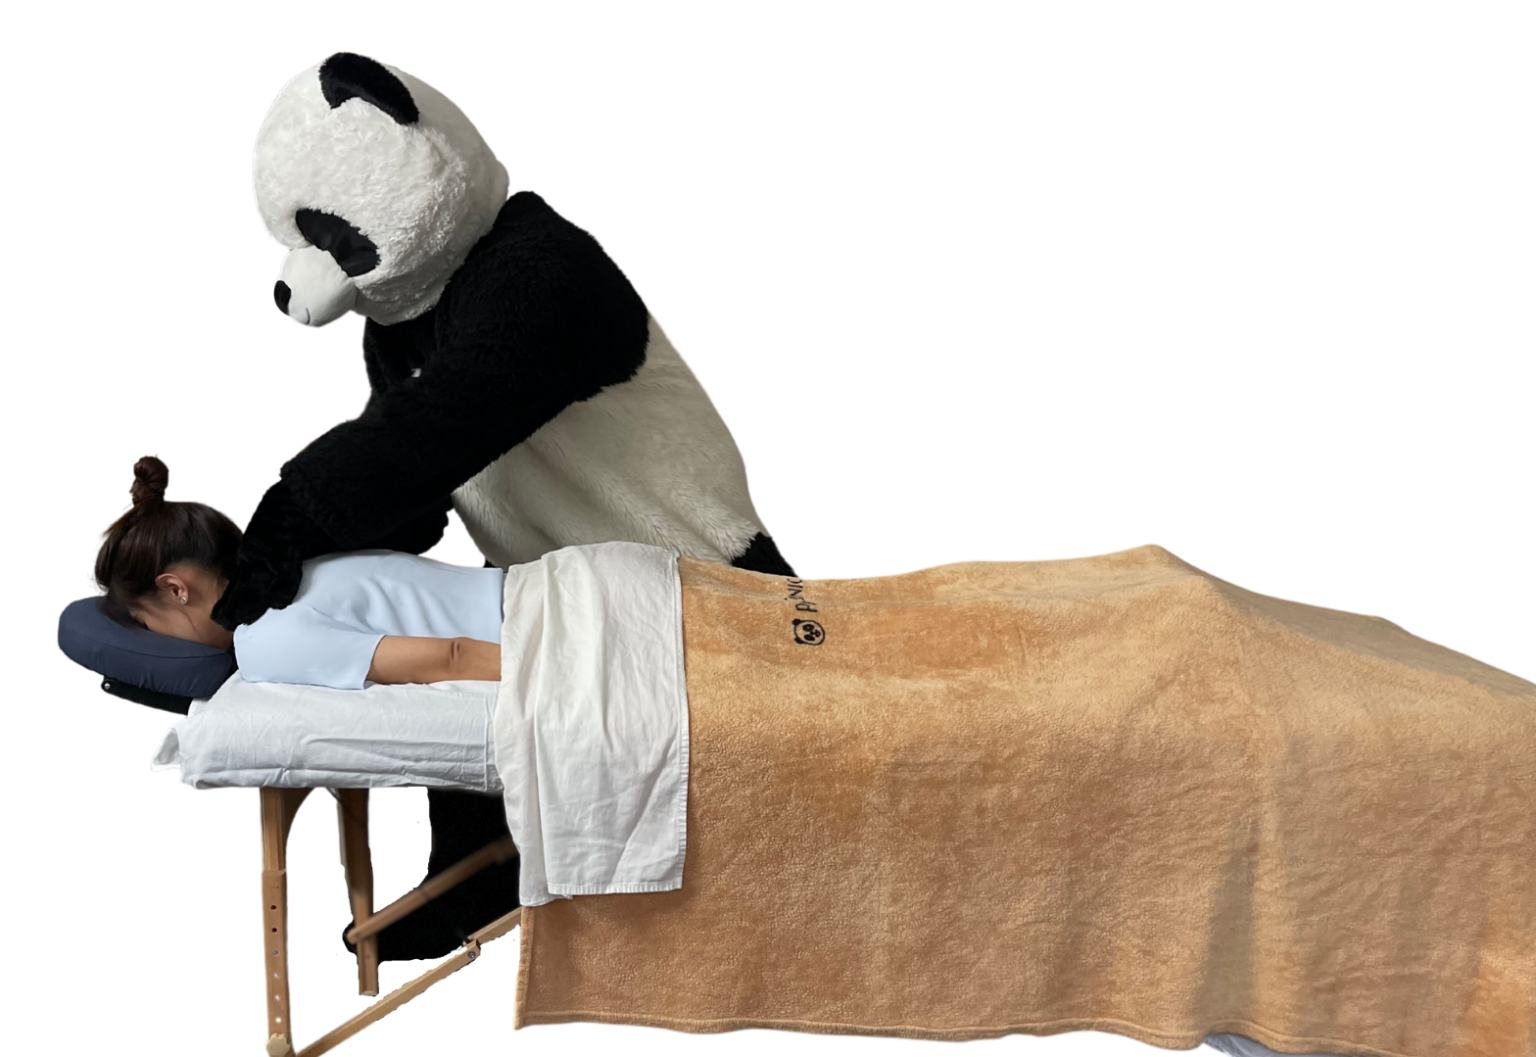 Evening Massage Burnaby Metrotown After Hours Rmt Panda Clinic